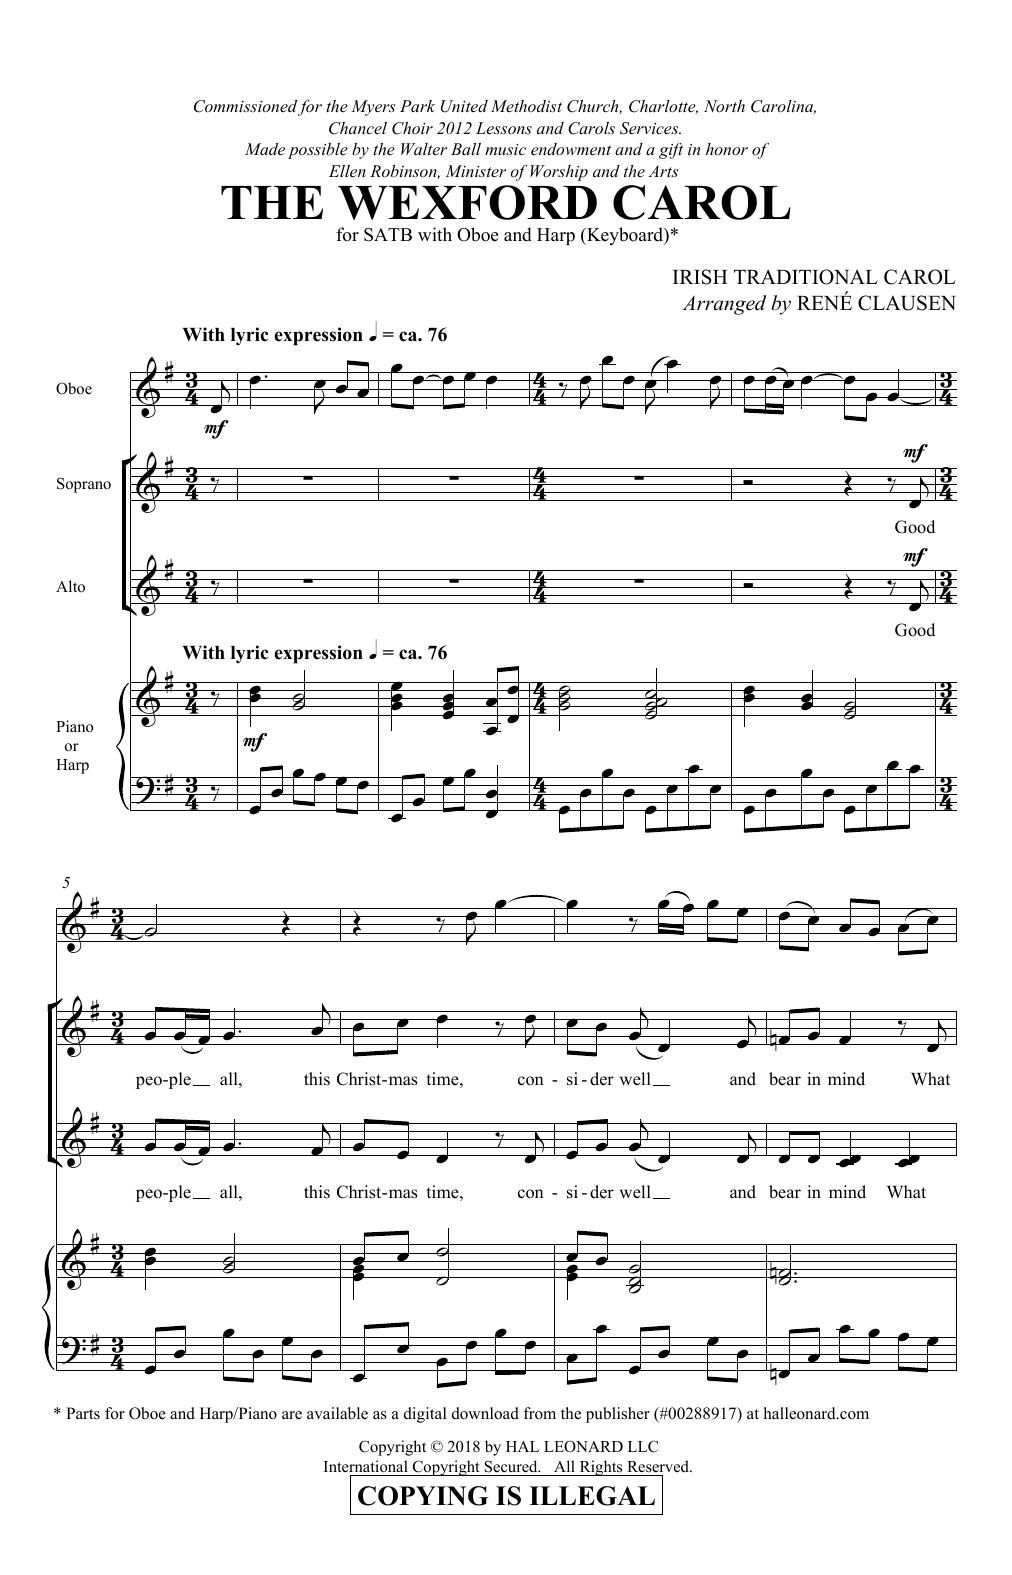 Traditional Irish Carol The Wexford Carol (arr. Rene Clausen) Sheet Music Notes & Chords for SATB Choir - Download or Print PDF